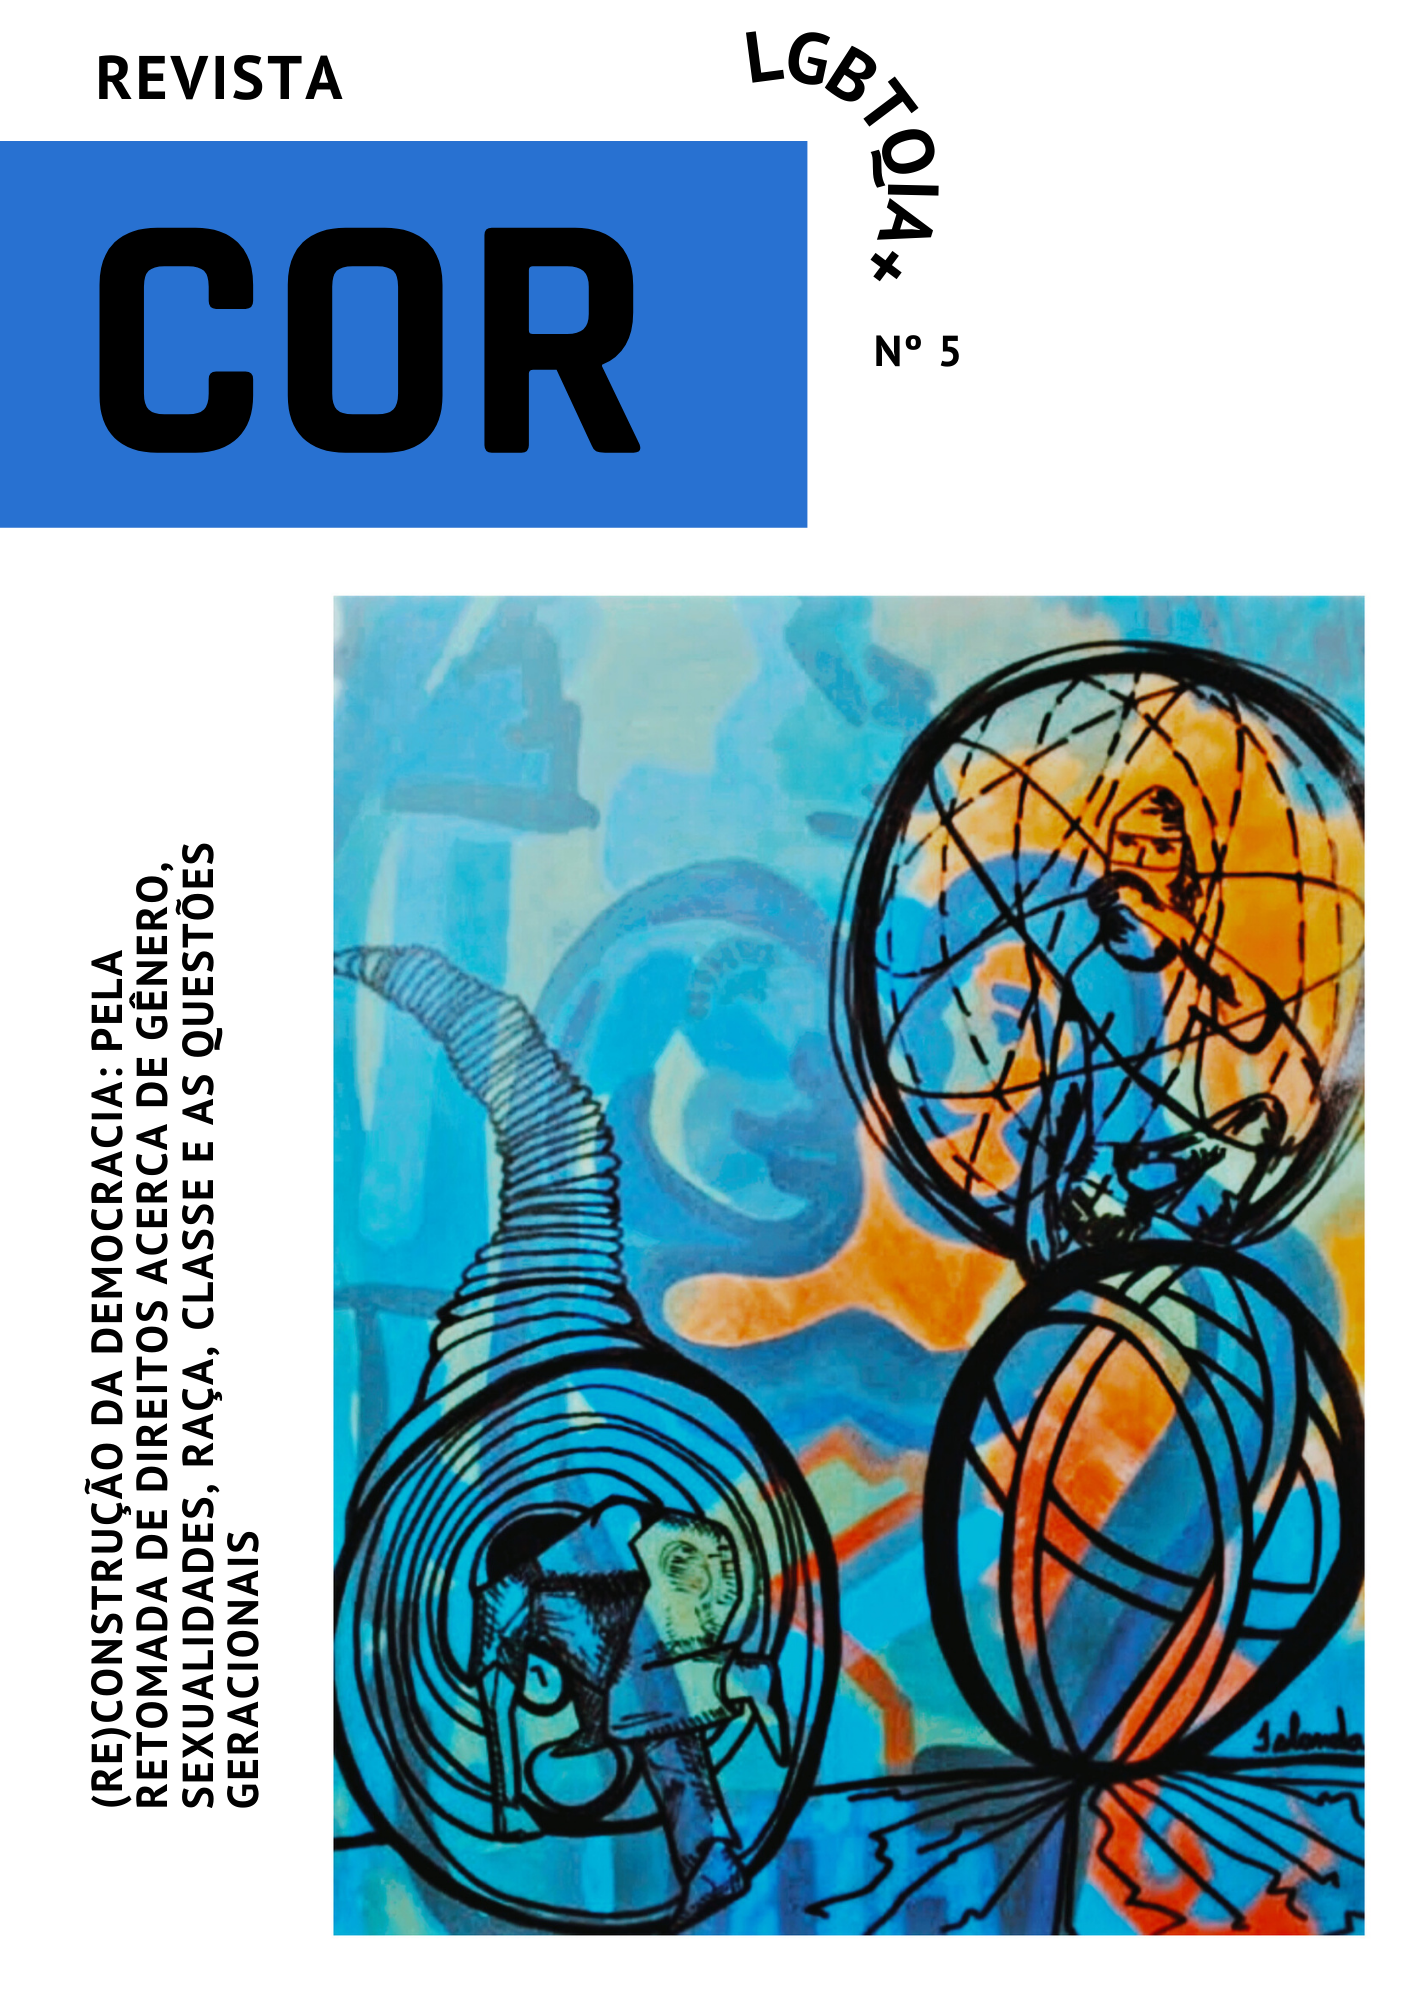 Revista COR LGBTQIA+, n. 2, v. 1, jan/2022 by corlgbtqia - Issuu